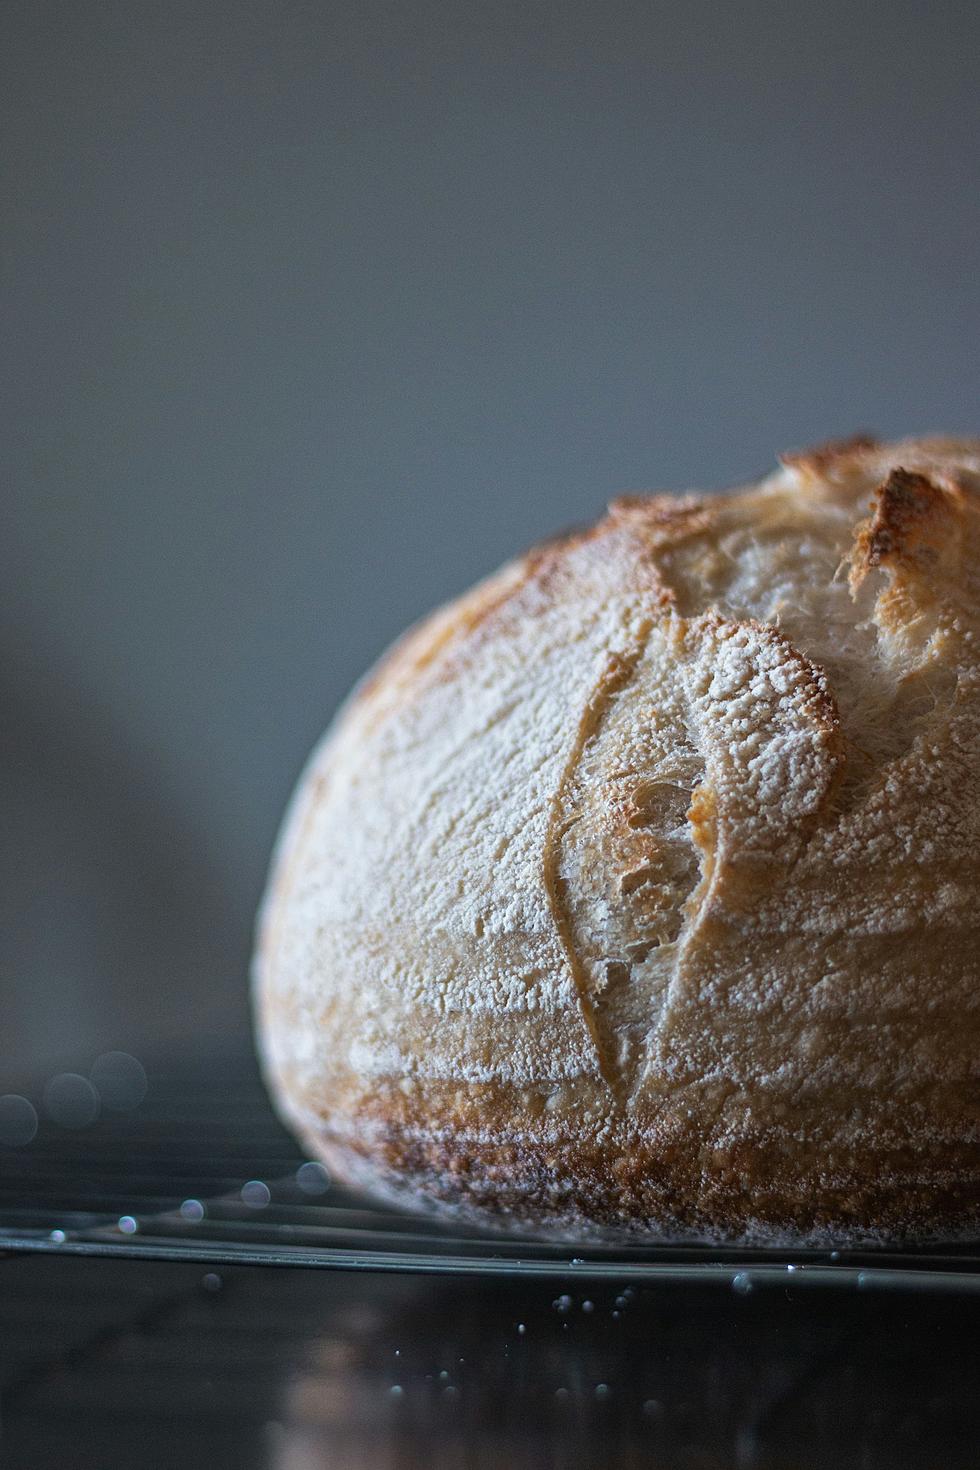 Minnesota's New Craze: Making Sourdough Bread